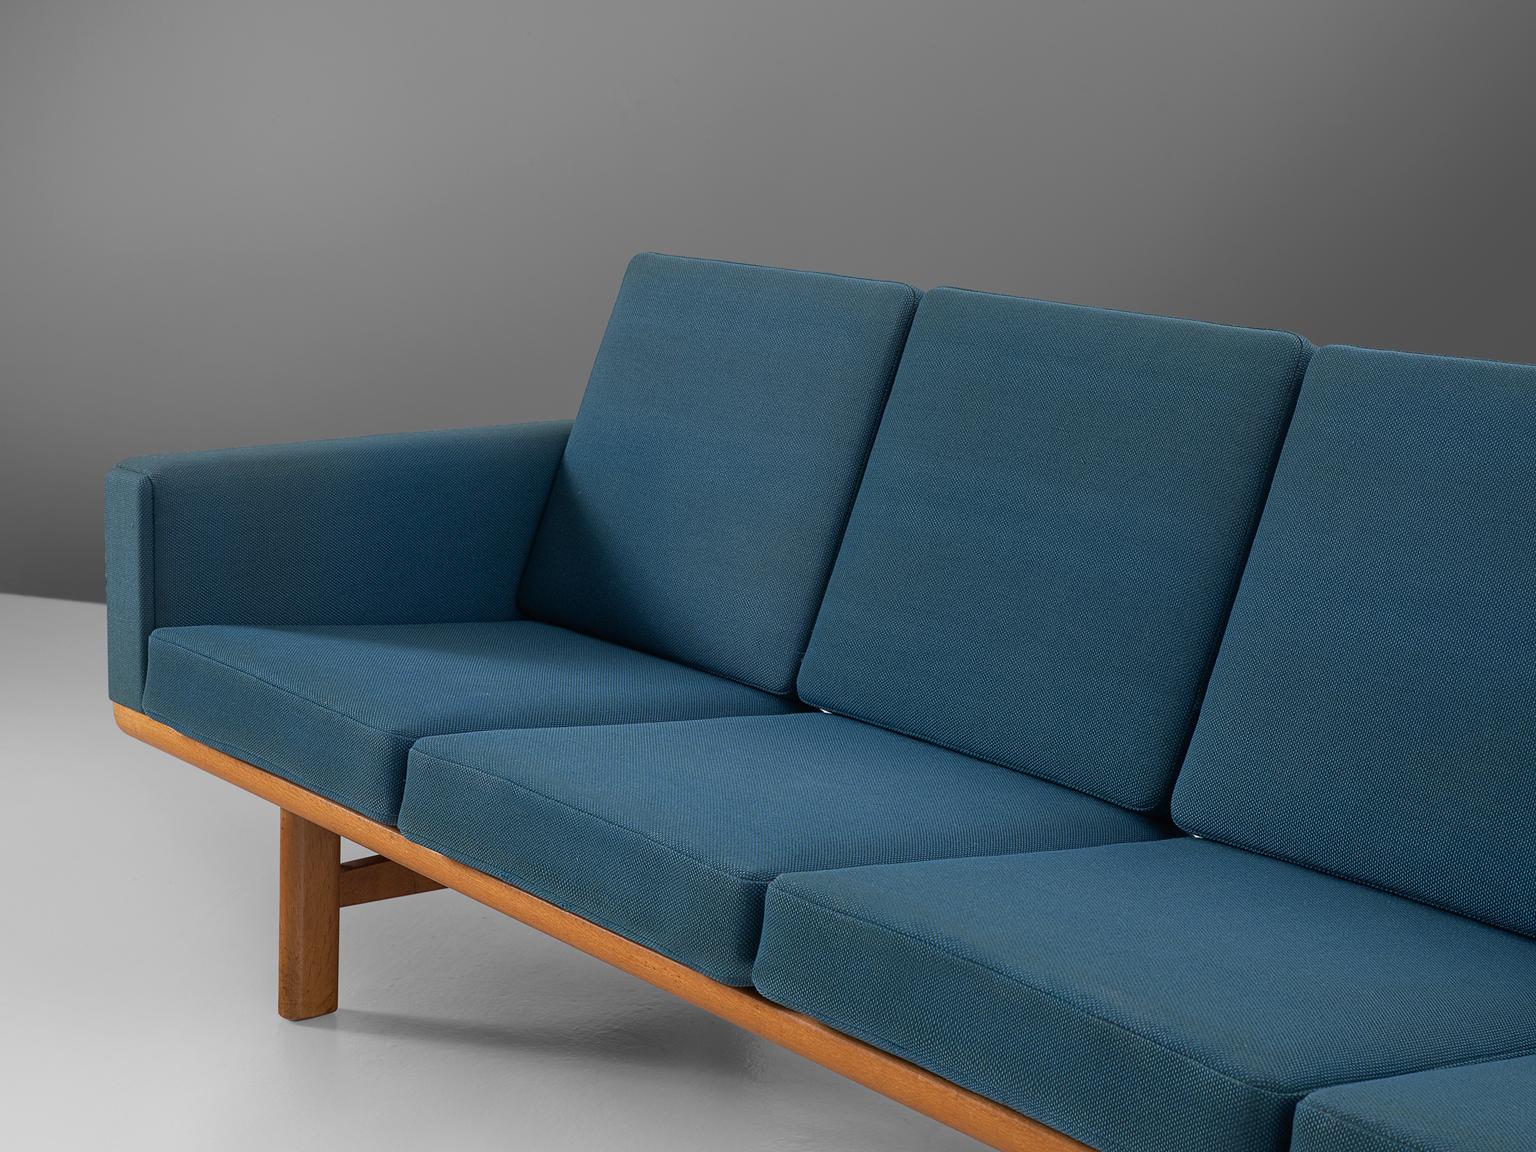 Mid-20th Century Hans Wegner Sofa in Oak and Petrol Upholstery for GETAMA